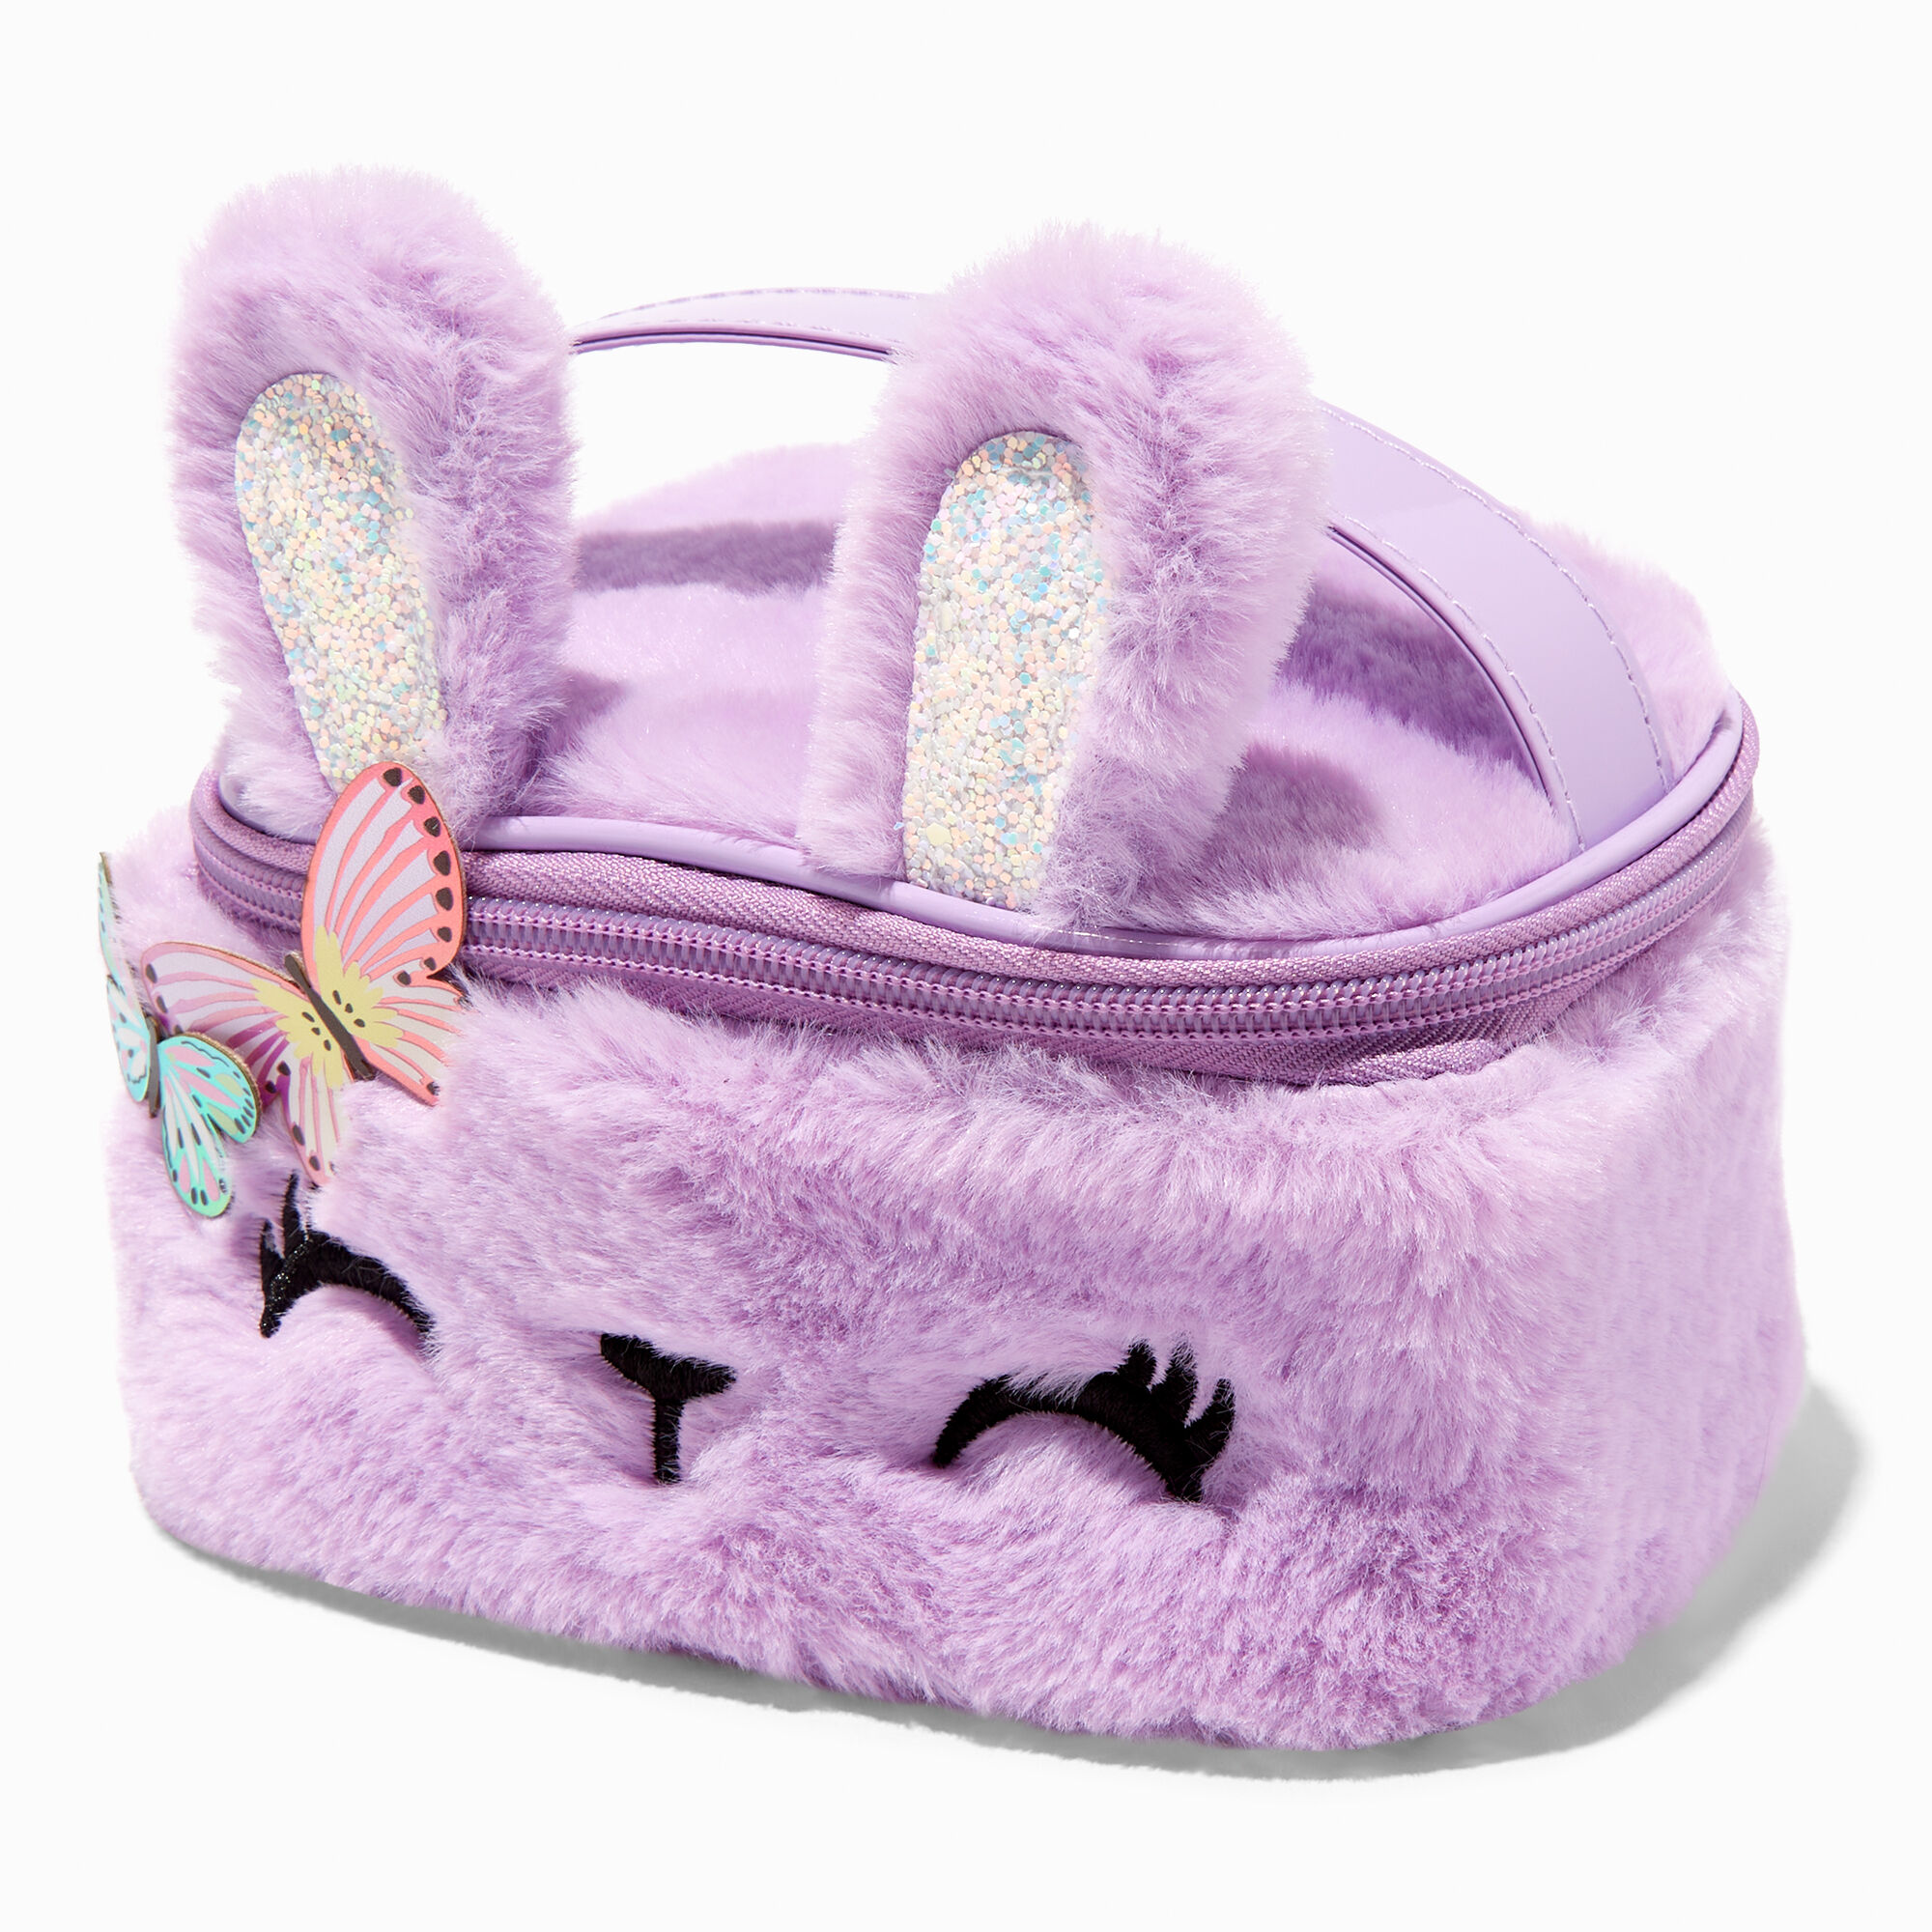 View Claires Club Furry Bunny Makeup Bag Purple information